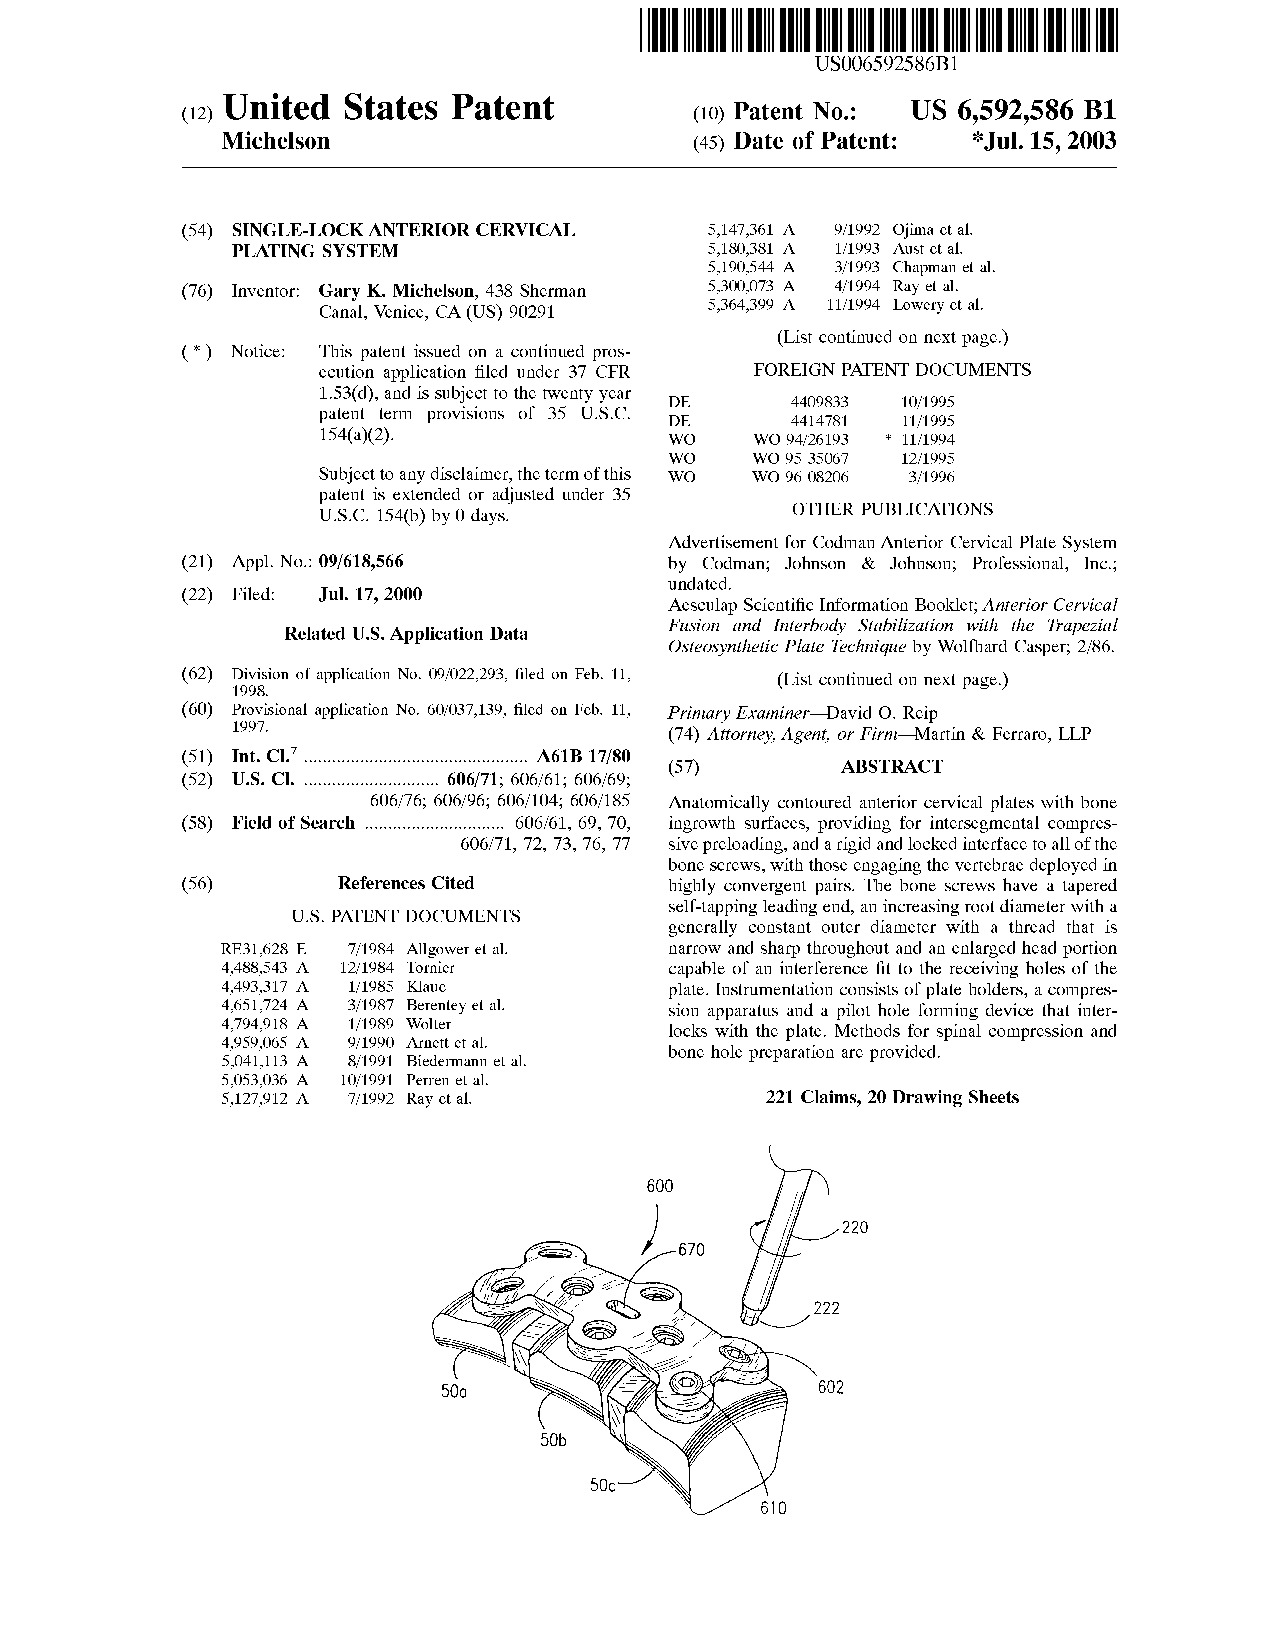 Single-lock anterior cervical plating system - Patent 6,592,586